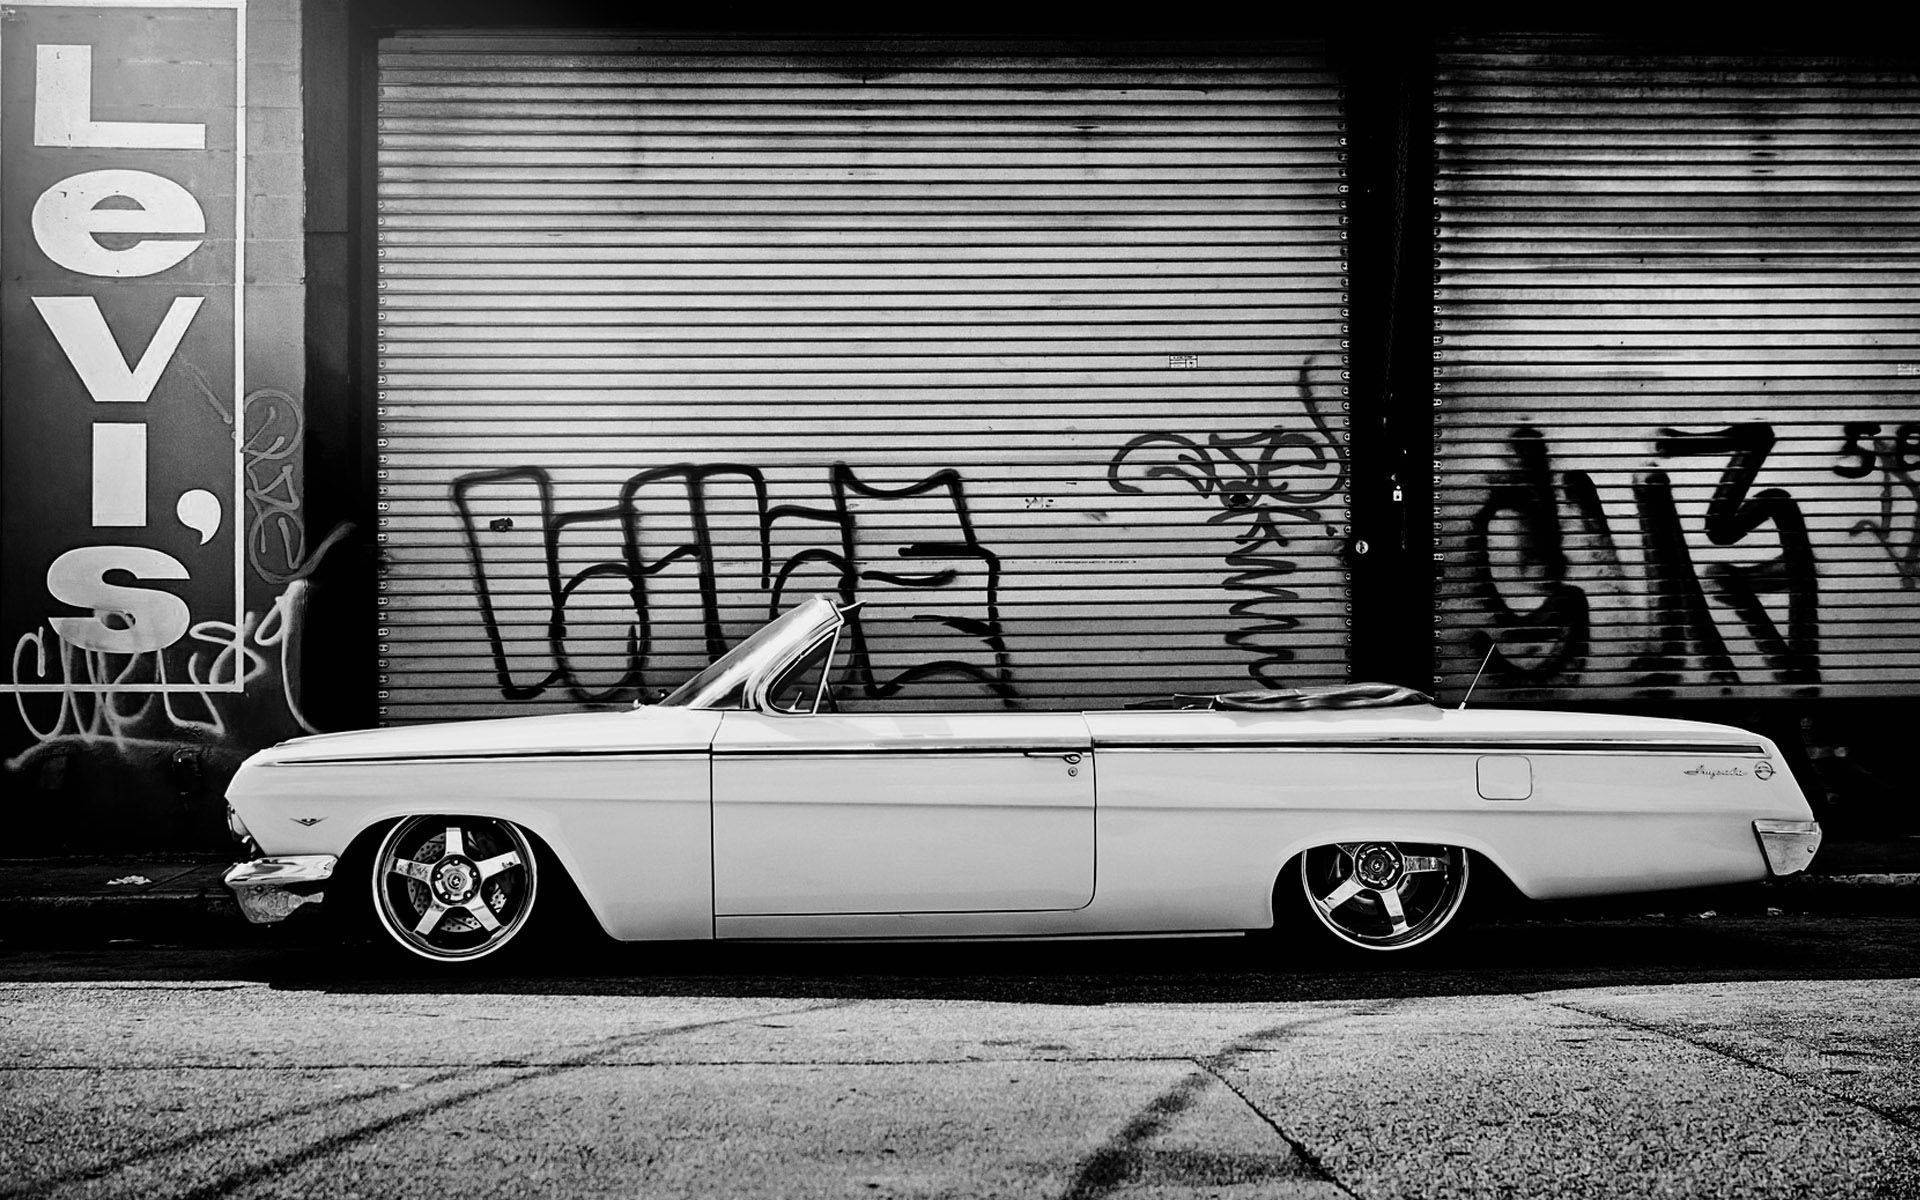 Old-school Graffiti With Car